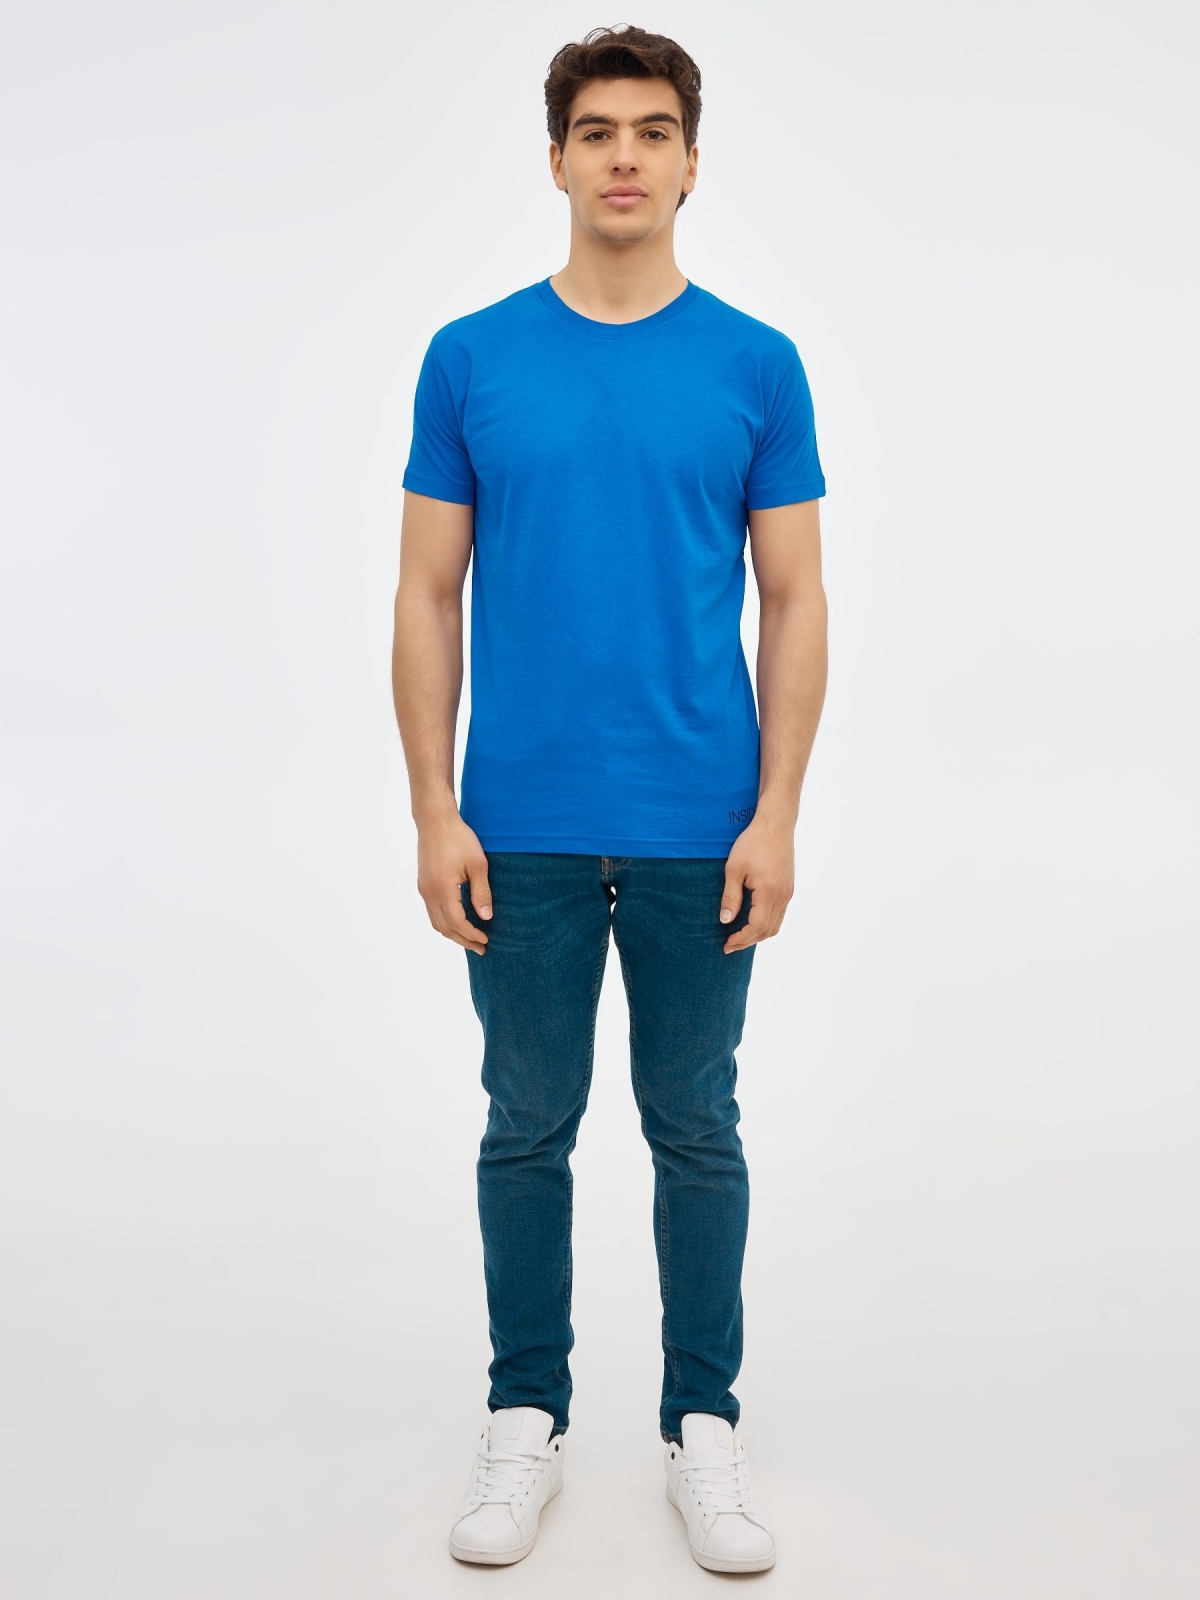 Camiseta básica manga corta azul ducados vista general frontal